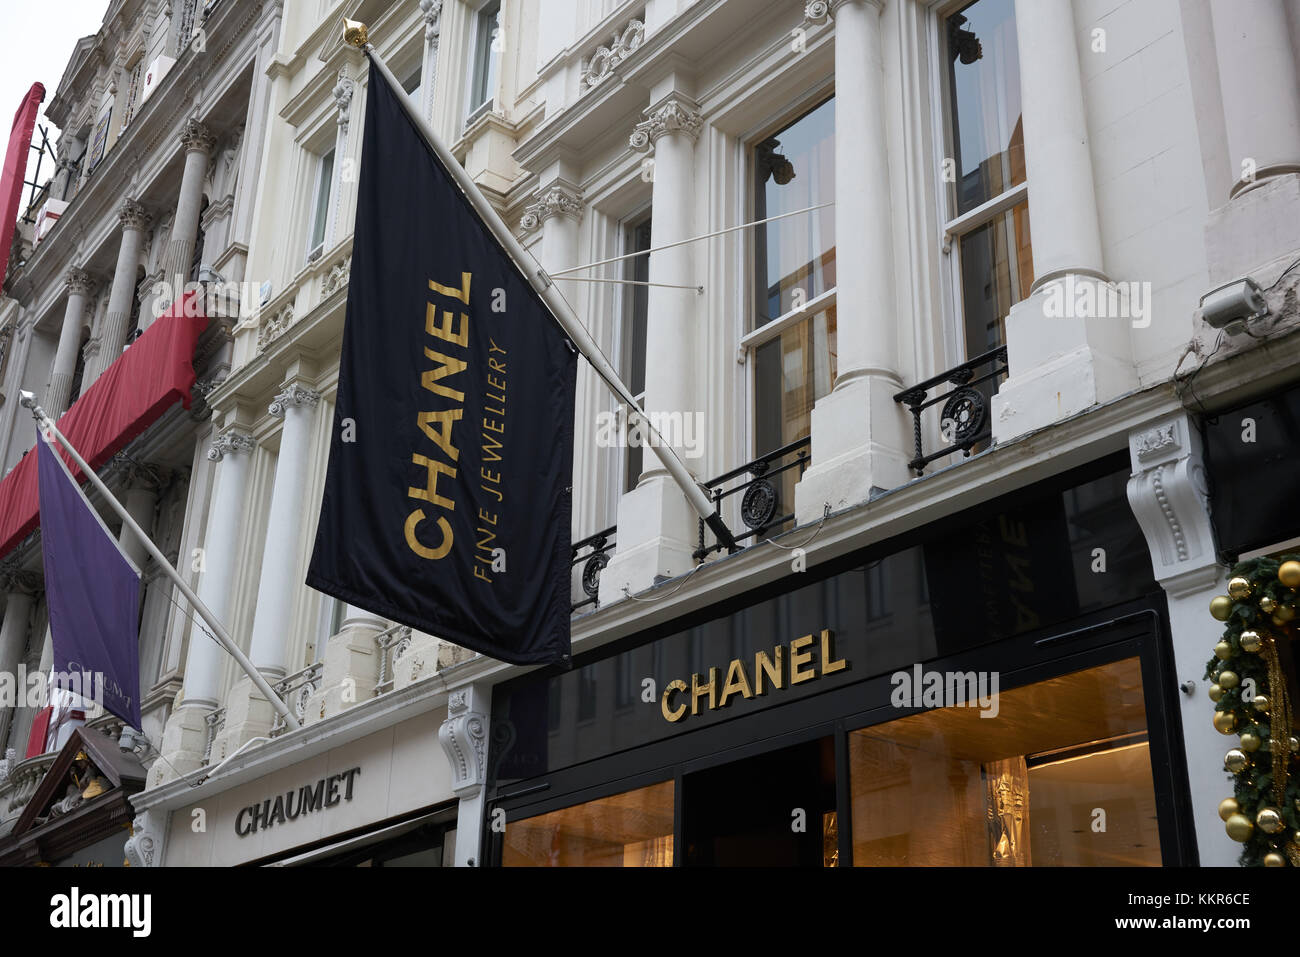 Chanel trebles size of Bond Street luxury emporium